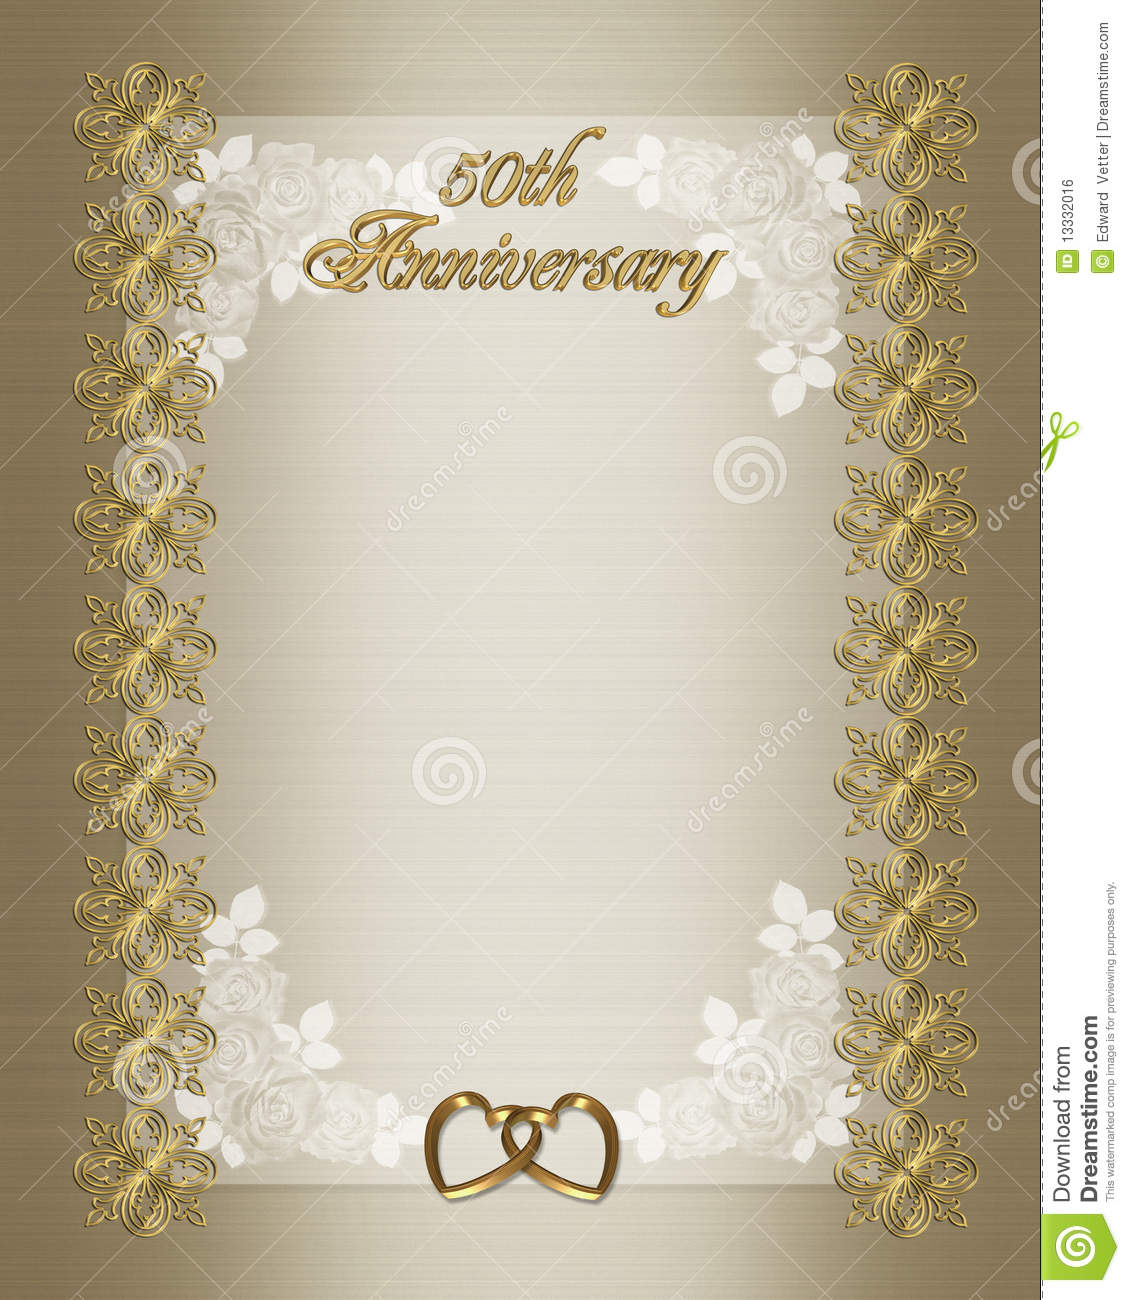 50th Wedding Anniversary Invitation Template Stock Illustration in dimensions 1130 X 1300